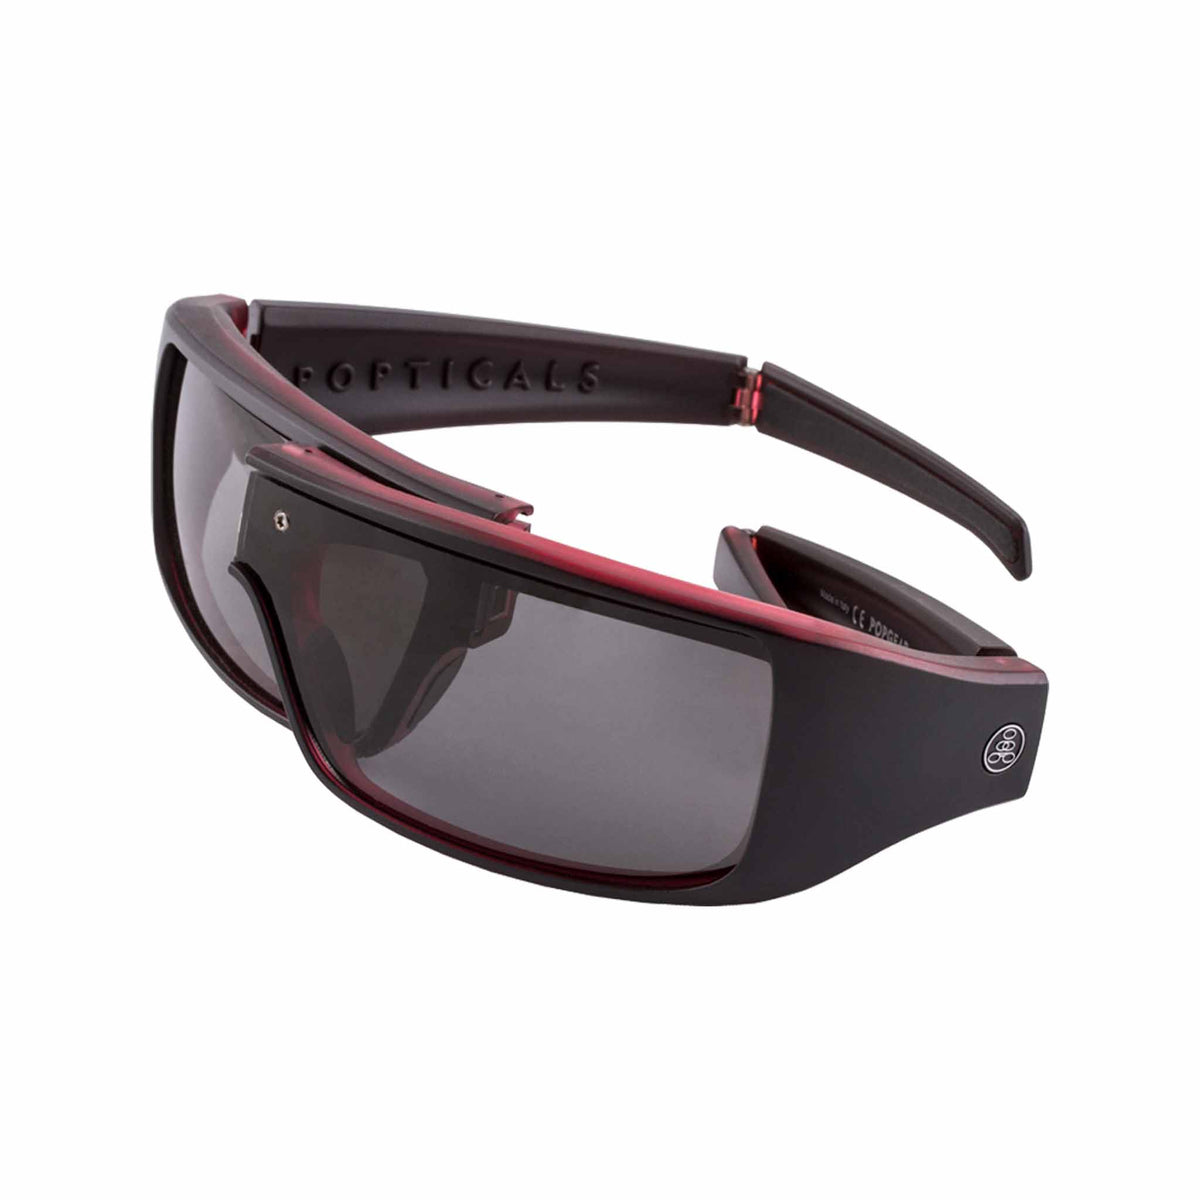 Popticals, Premium Compact Sunglasses, PopGear, 030050-REGP, Polarized Sunglasses, Matte Red/Black Crystal Frame, Gray Lenses, Spider View